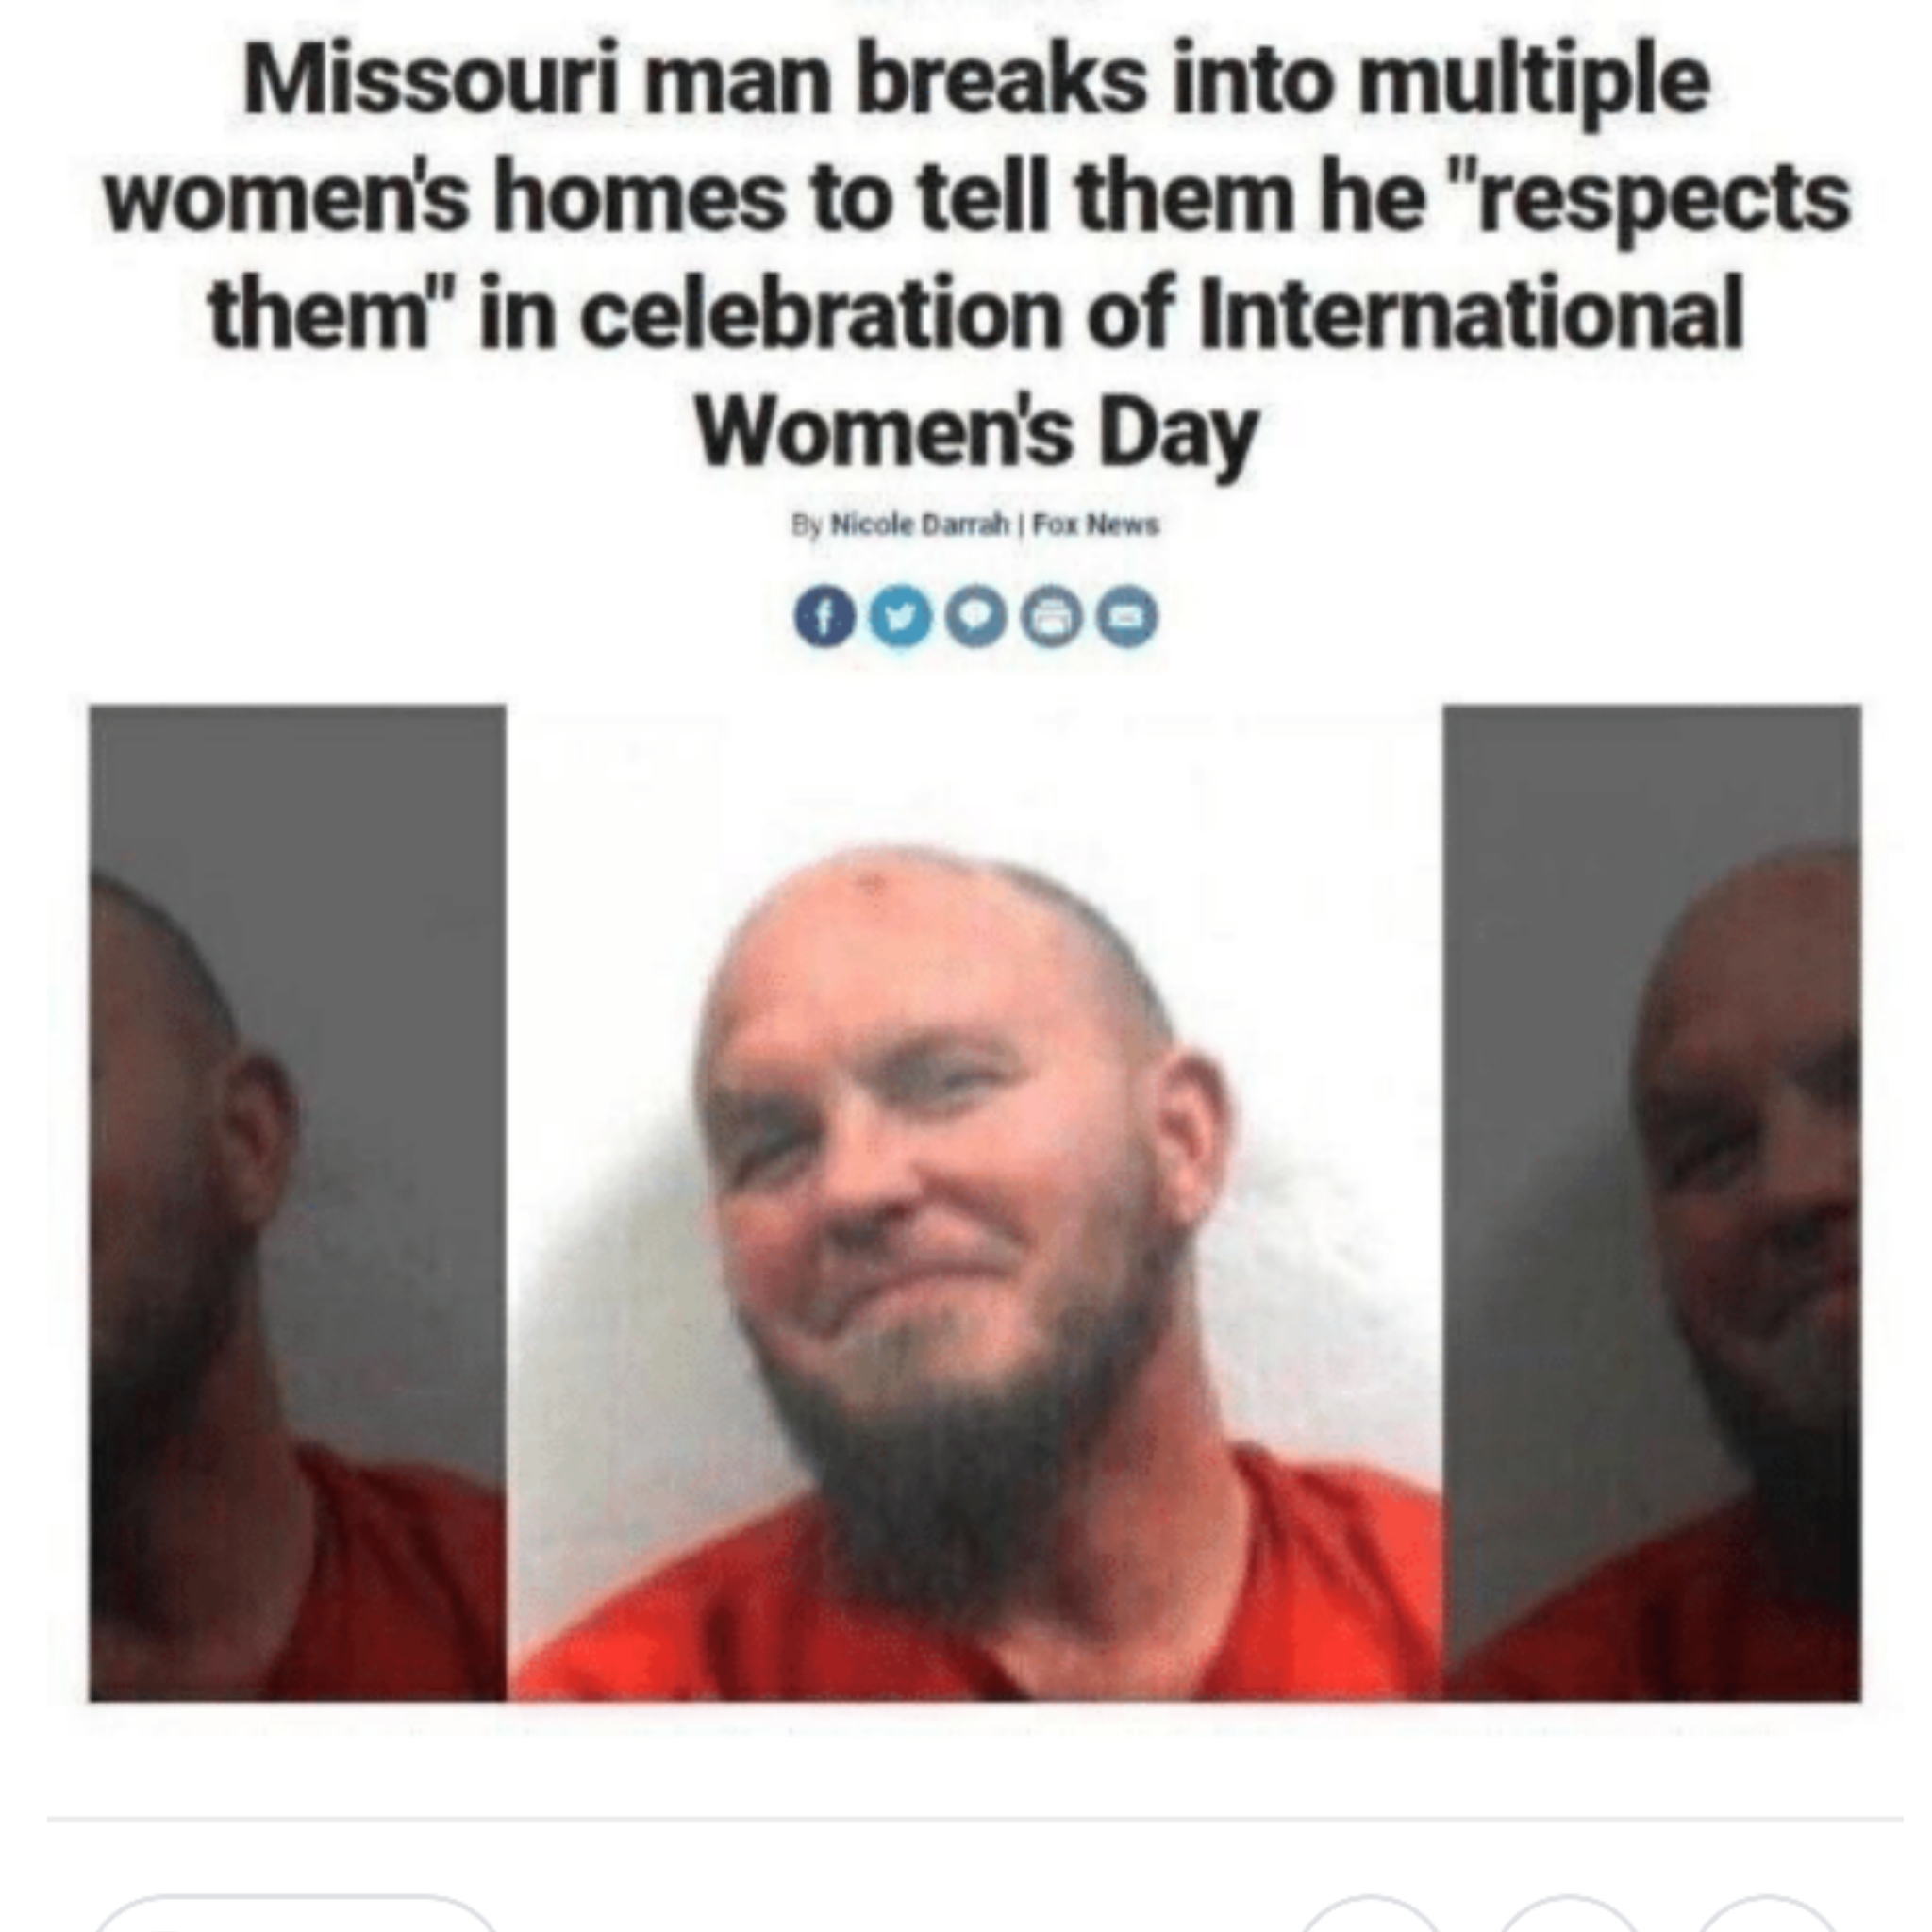 missouri man breaks into multiple women's homes - Missouri man breaks into multiple women's homes to tell them he "respects them" in celebration of International Women's Day 00000